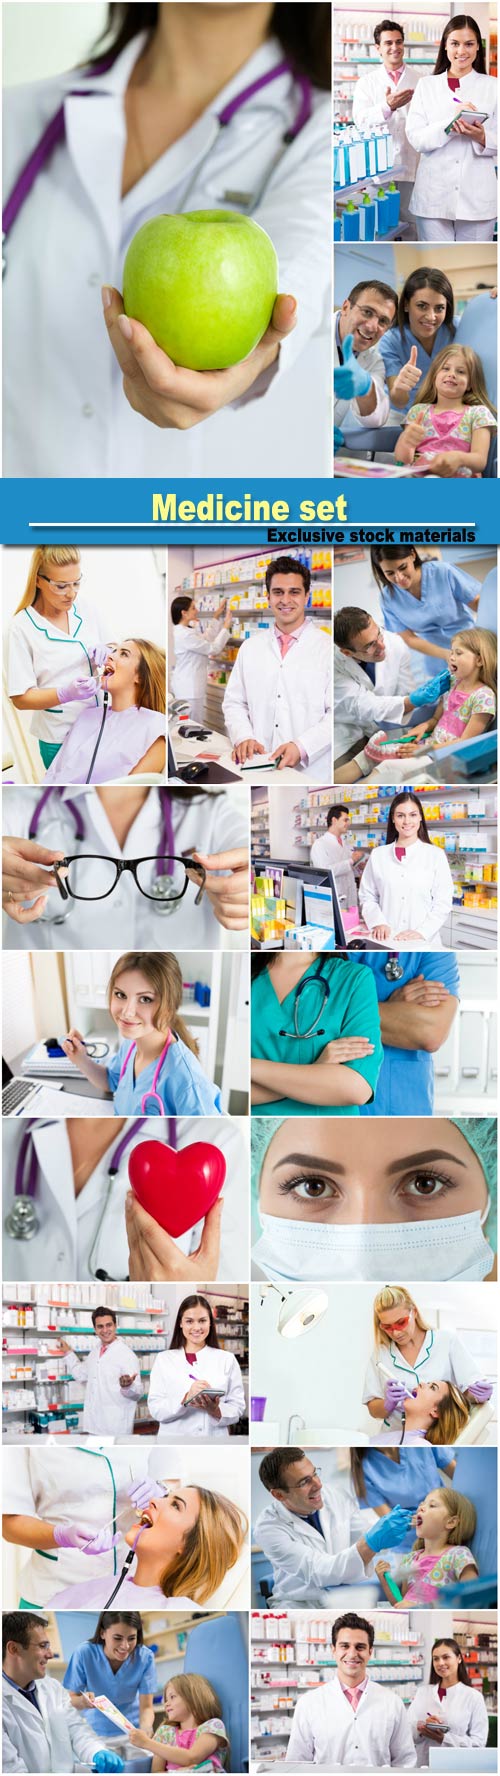 Medicine set, pharmacist, dentist